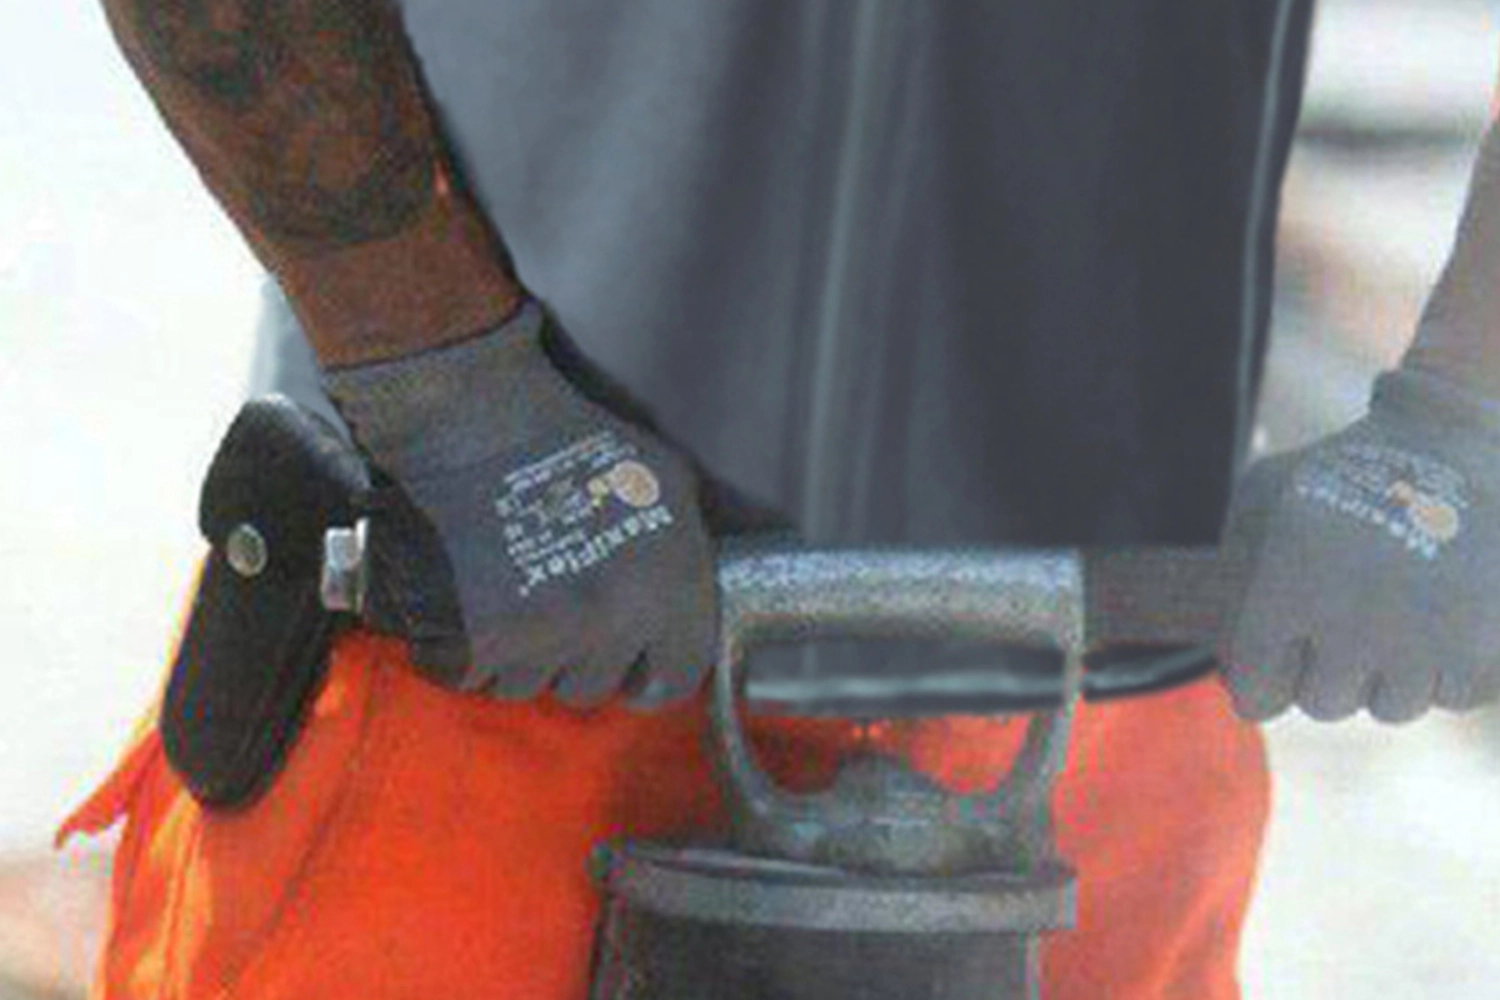 Hitzeschutz am Bau. Bildausschnitt eines Bauarbeiters mit E.COOLINE Powercool SX3 Shirtweste